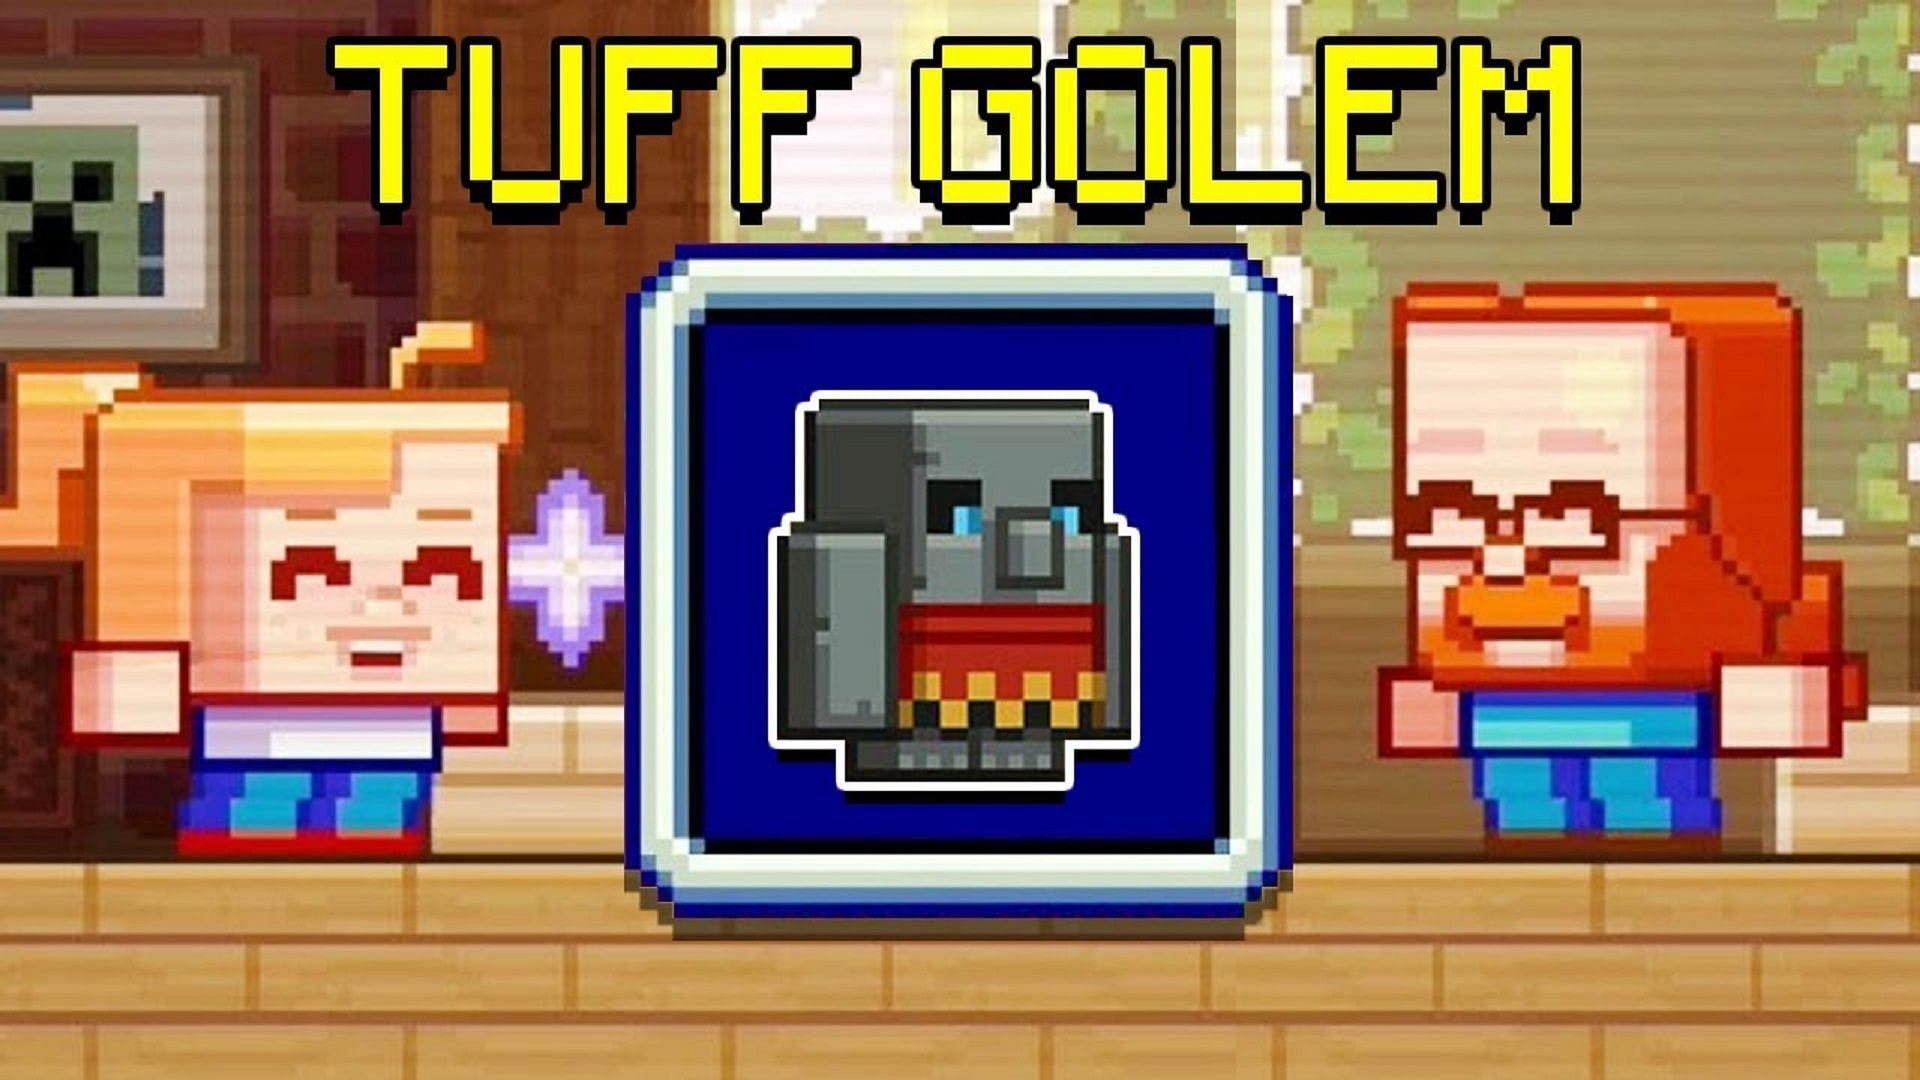 The Tuff Golem still has many fans in the Minecraft community (Image via Mojang/YouTube)